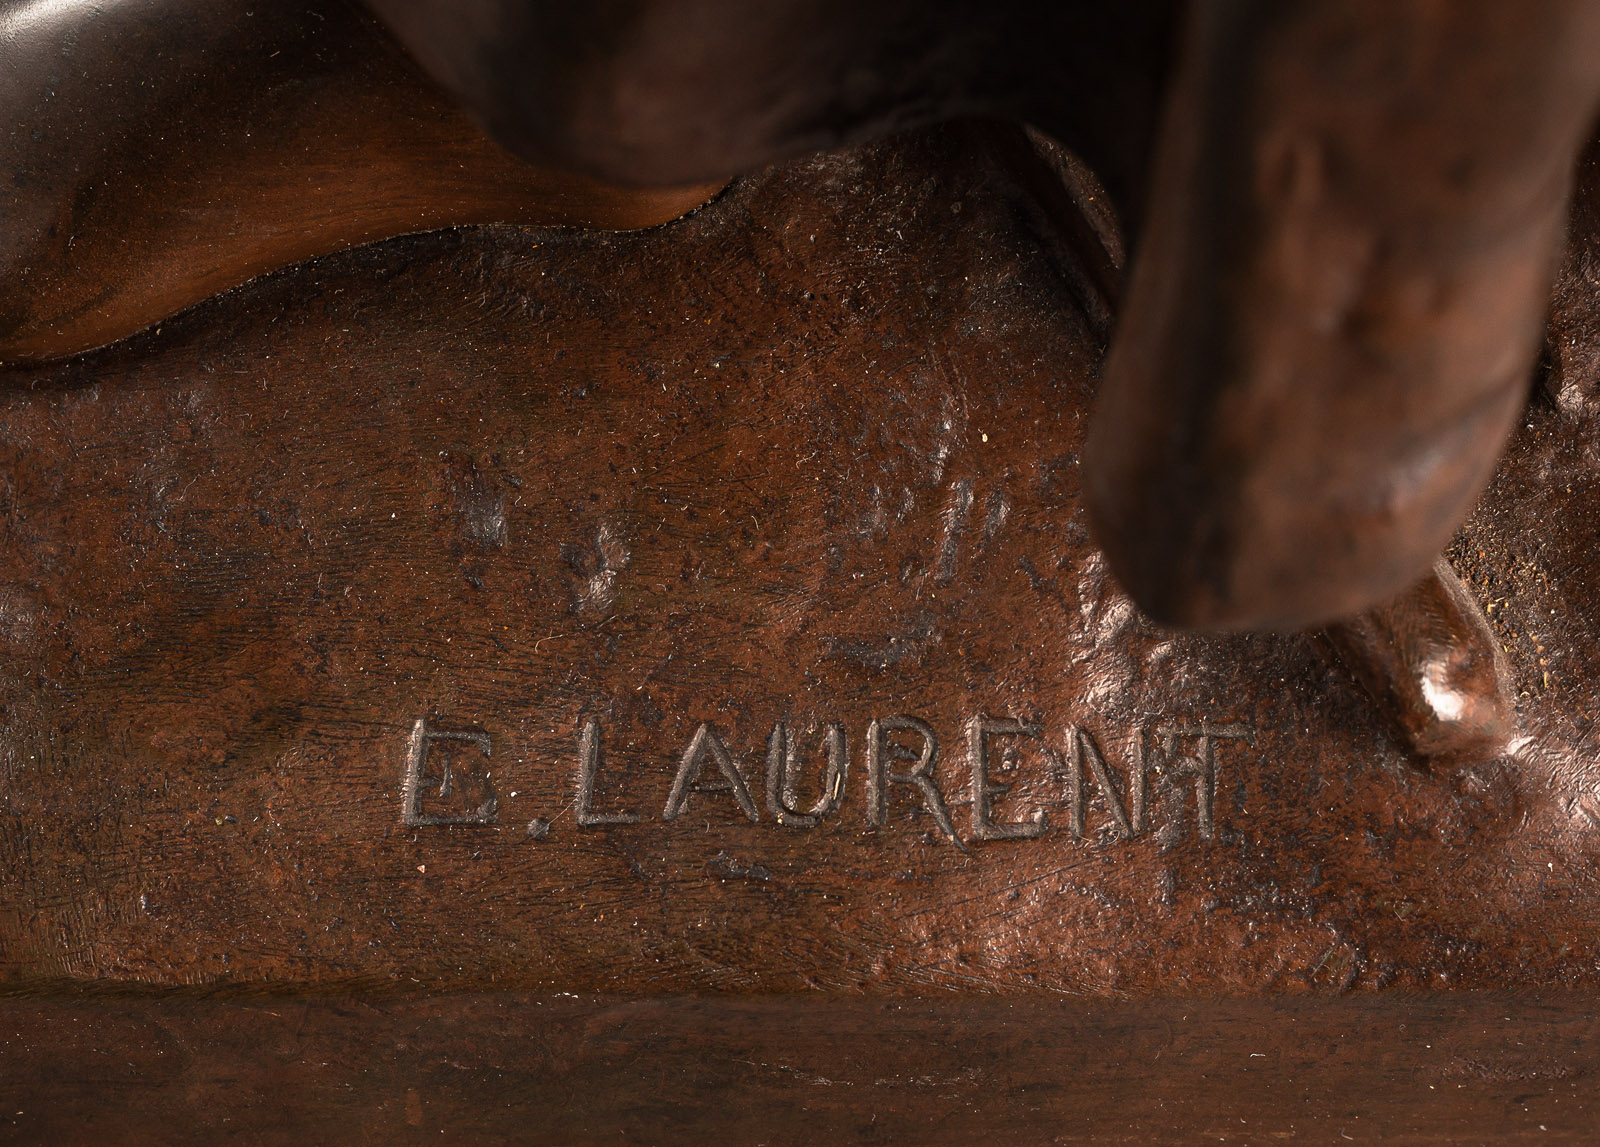 LAURENT, EUGENE - Image 3 of 3